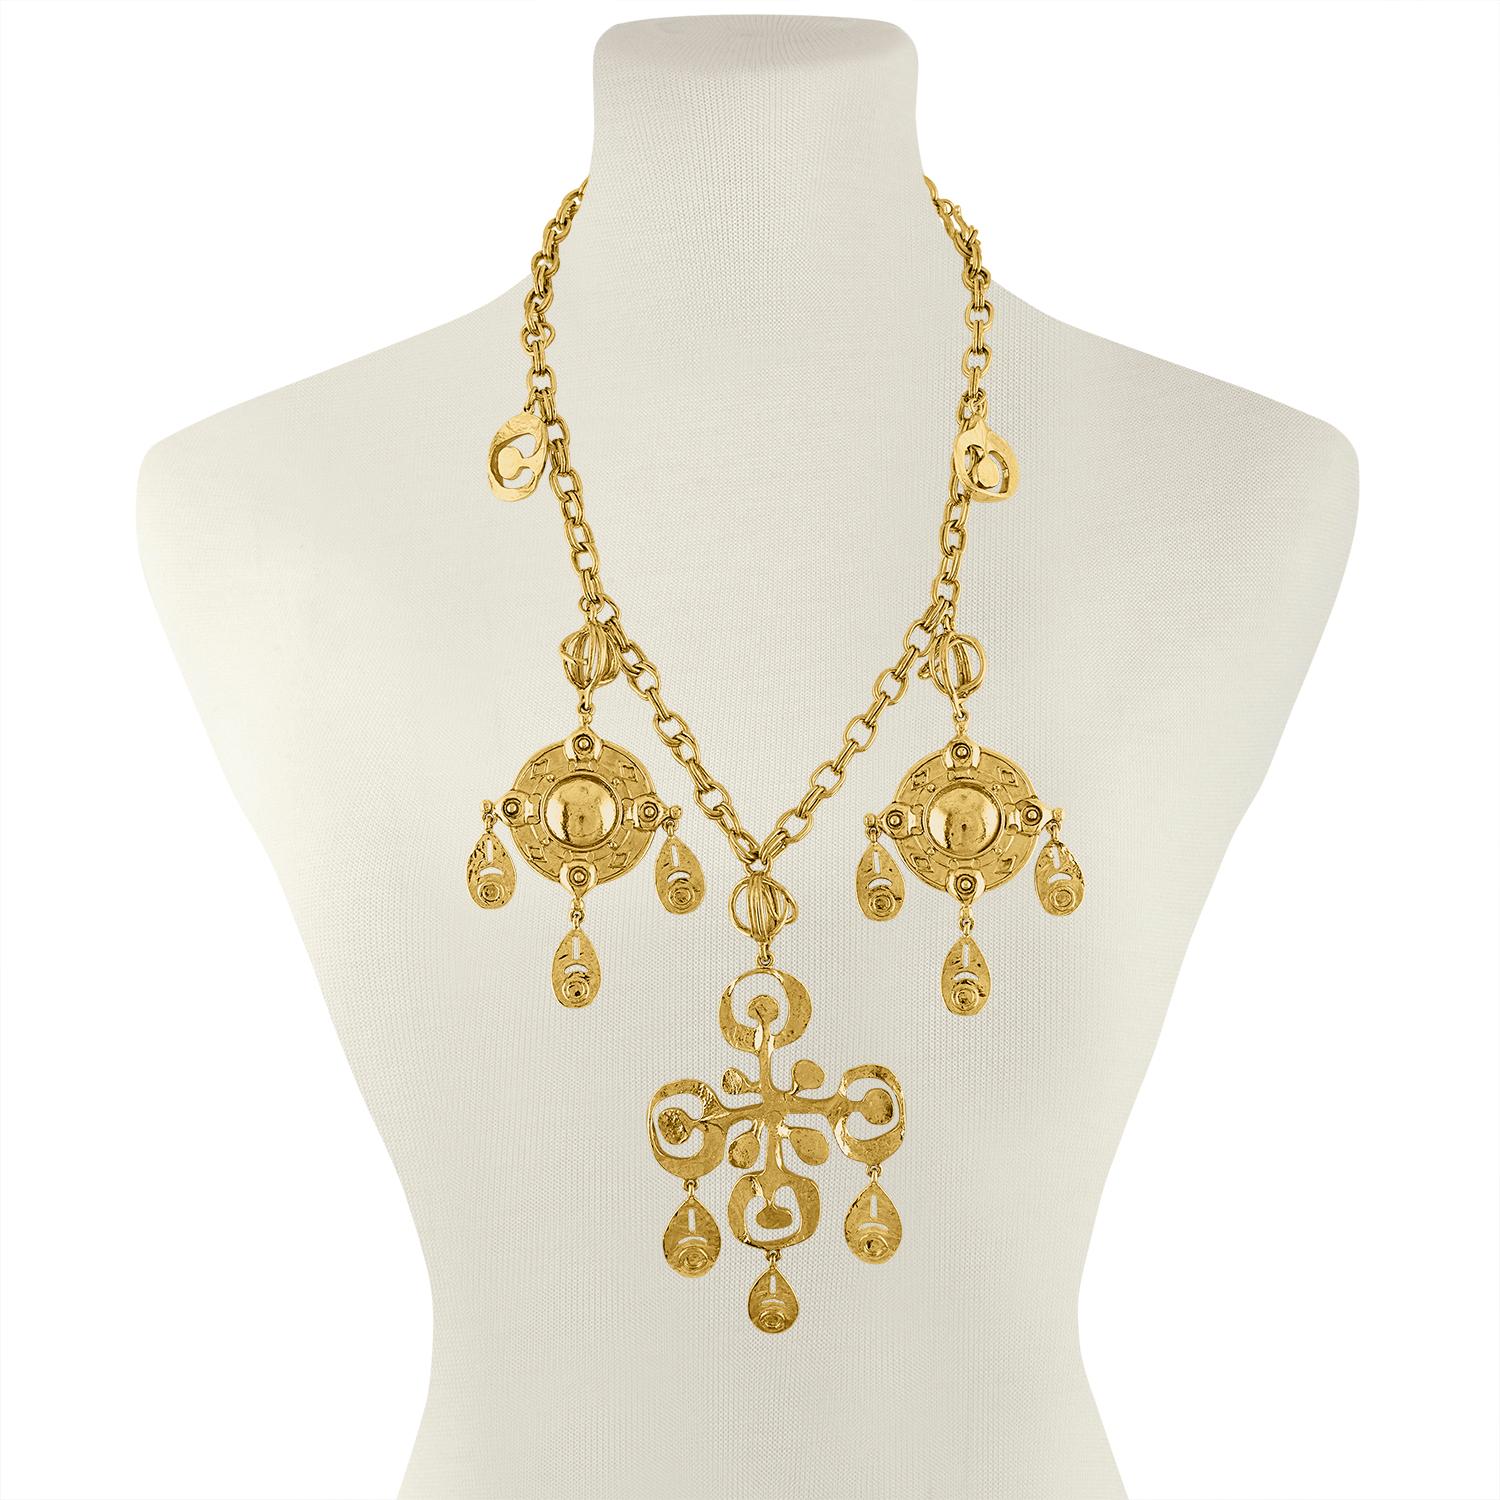 Oscar De La Renta Roman Gold Tone Cross & Shield Necklace / Belt
The necklace / belt is 30” long with a 4” extender.
The necklace / belt weighs 208.1 grams
